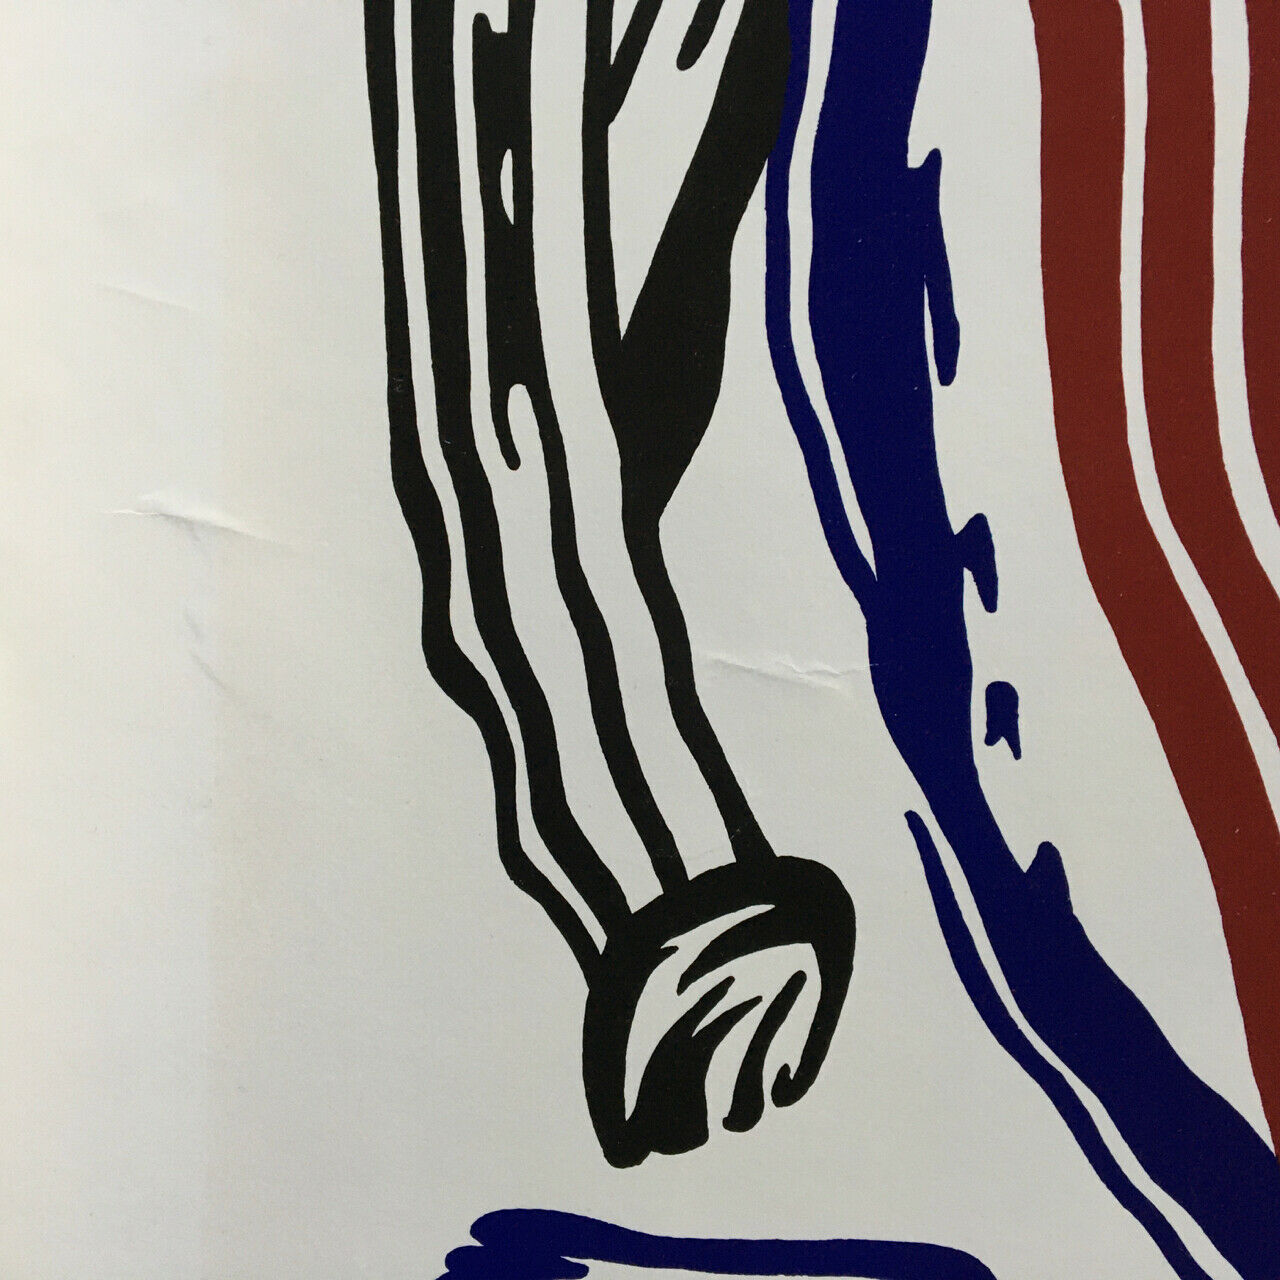 Roy Lichtenstein — poster for the exhibition at the Daniel Templon gallery — 1983.